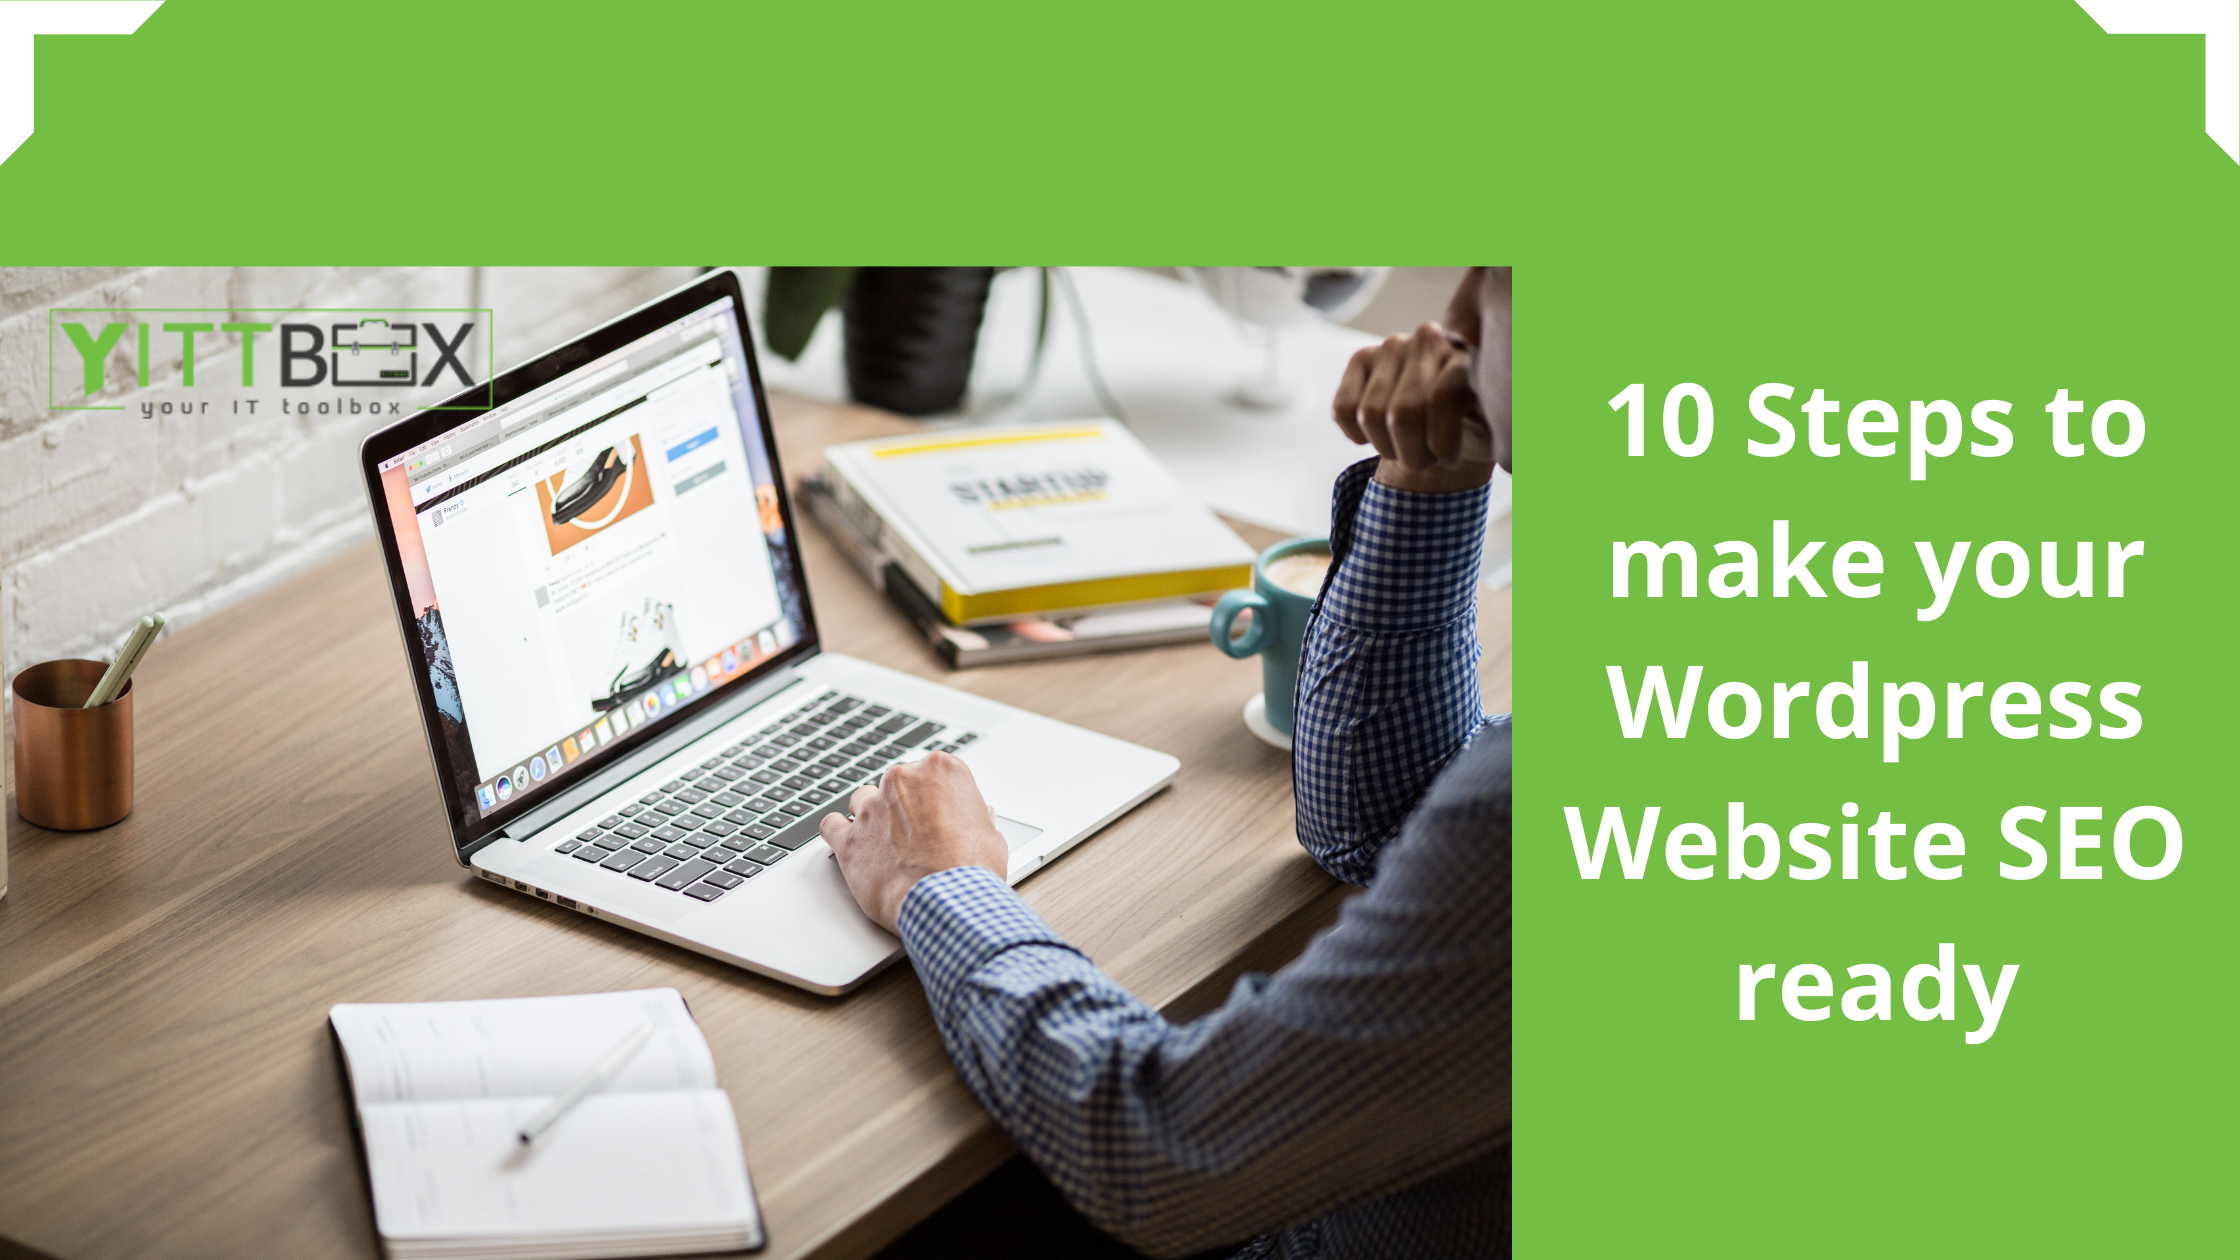 10 Steps to make your WordPress Website SEO ready